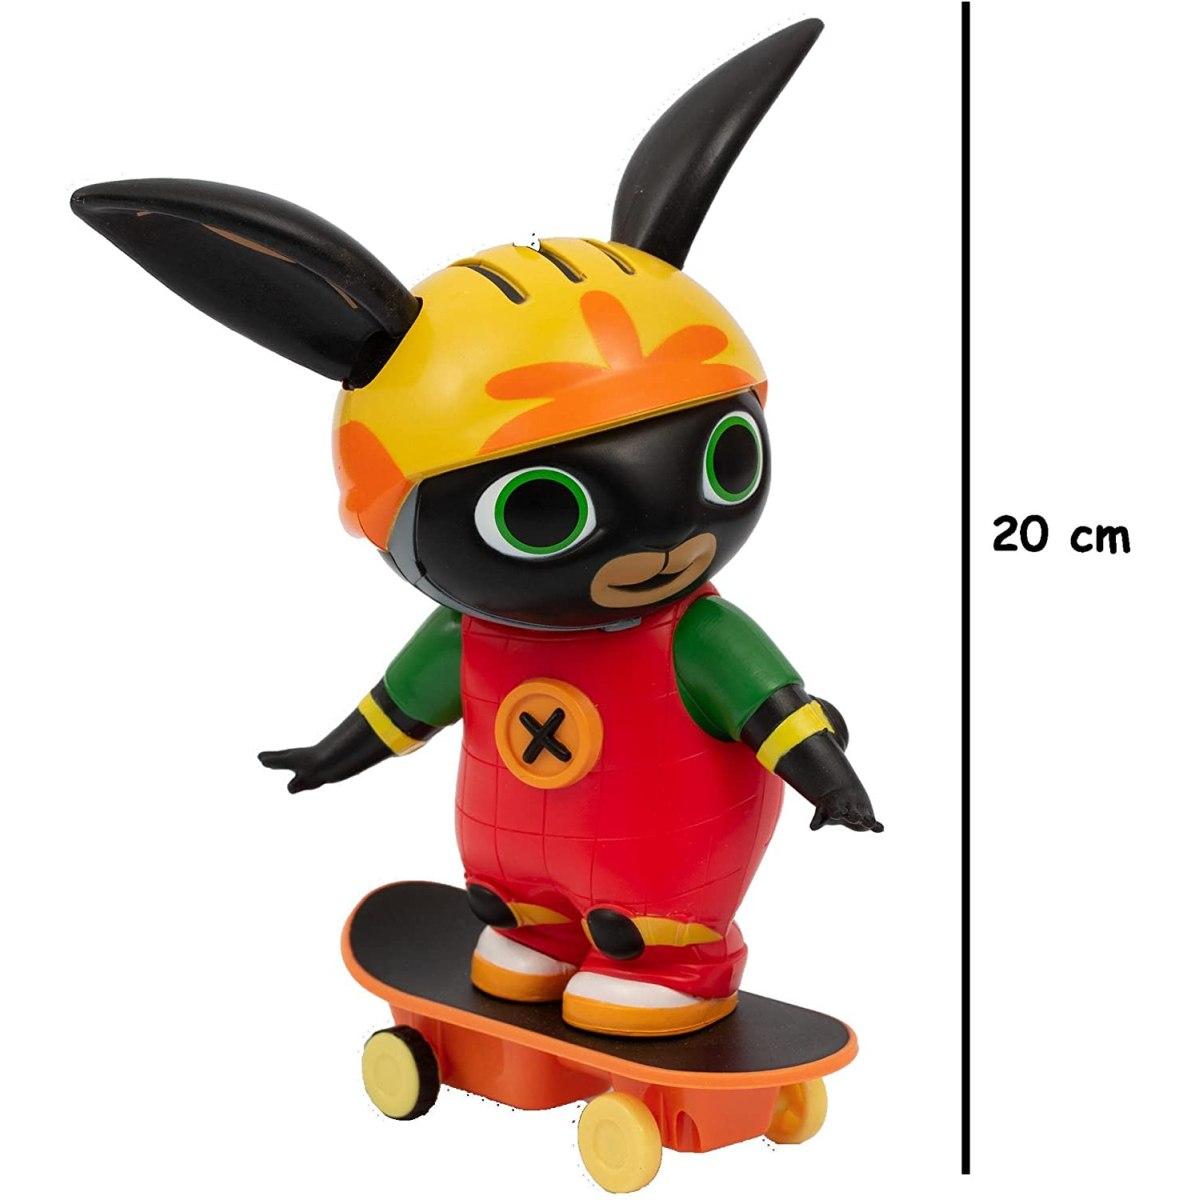 Bing skateboard 20 cm